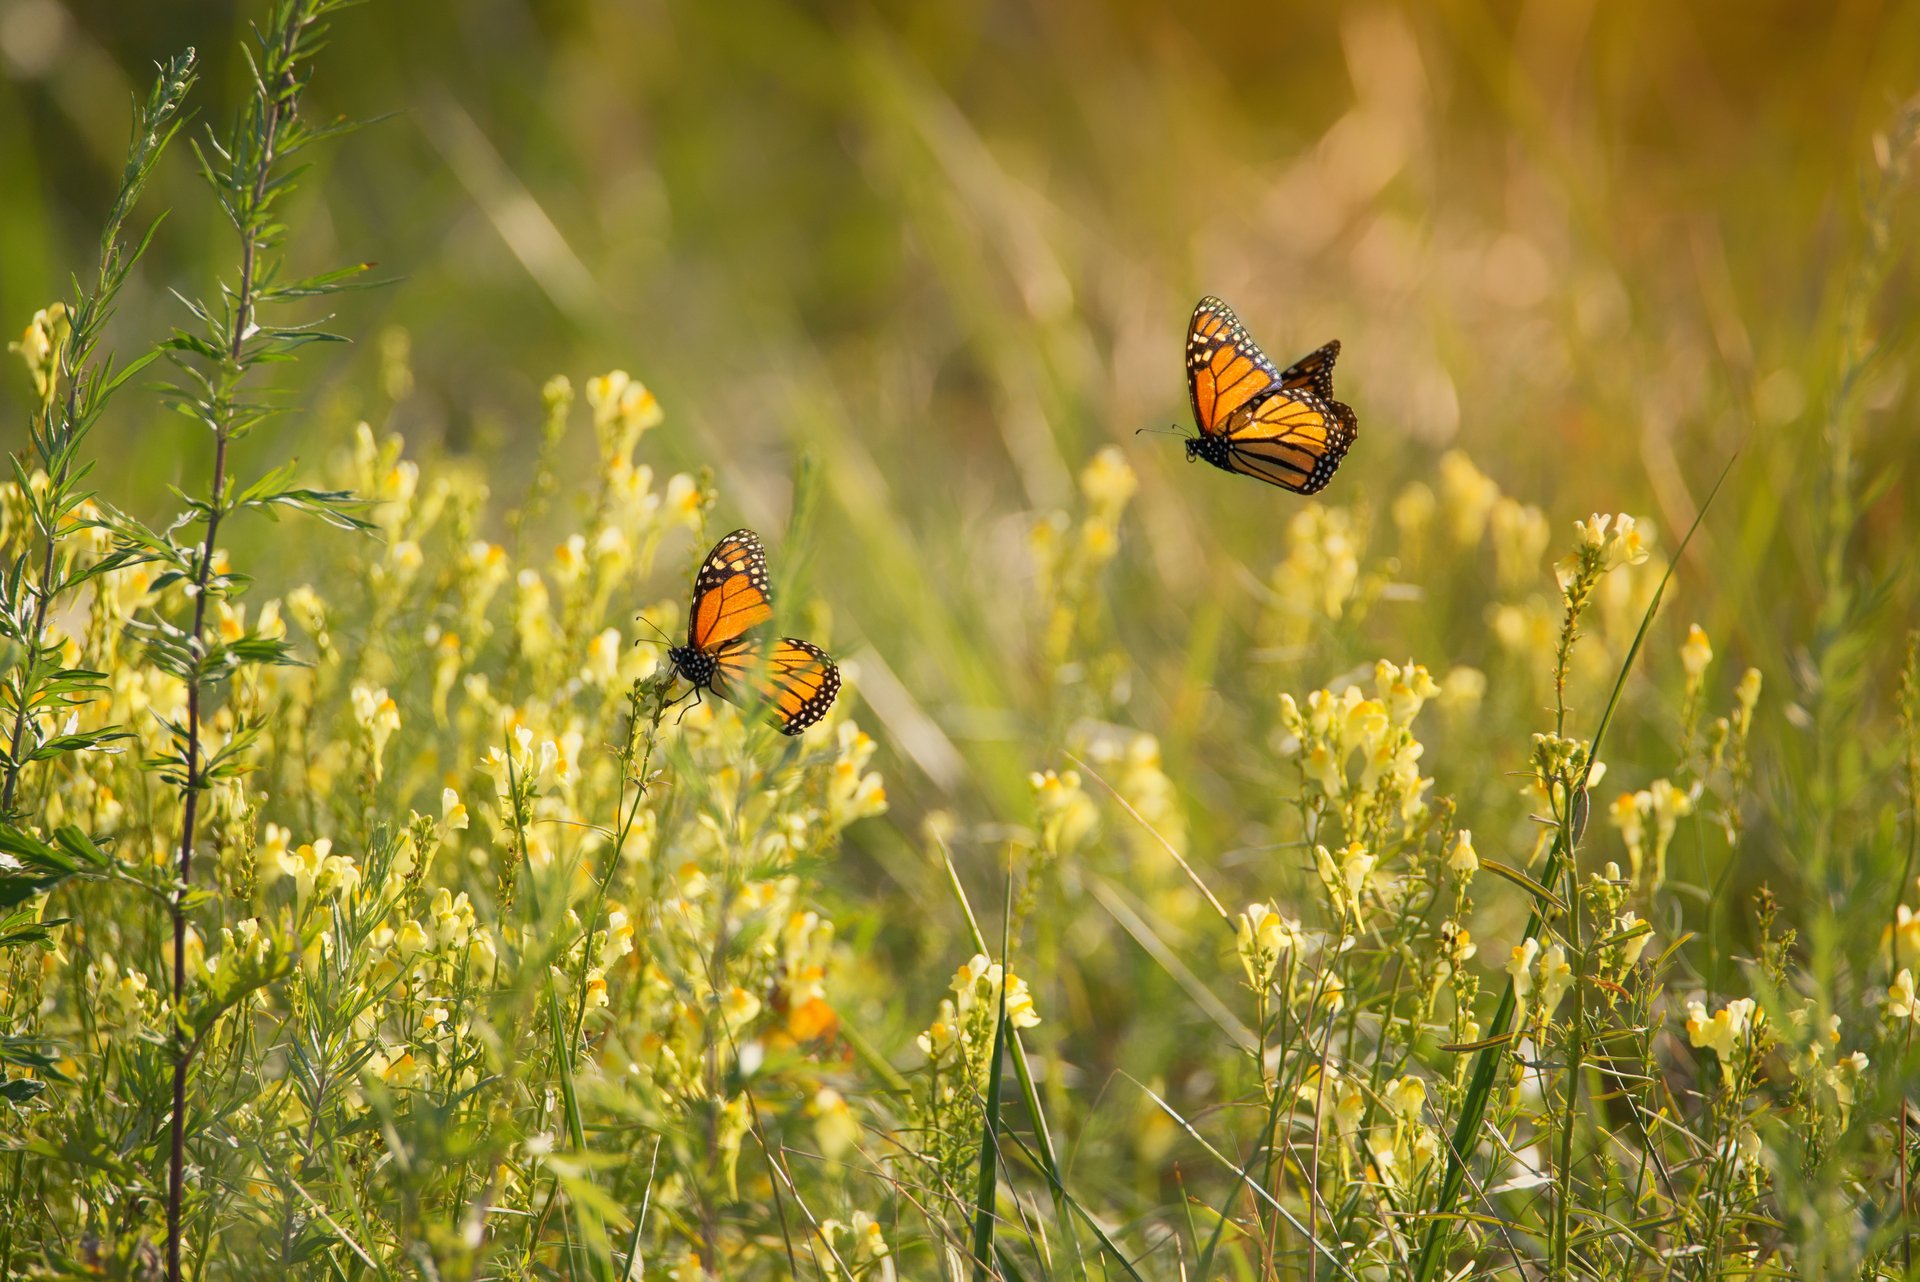 Two Monarchs on Wildflowers copyright Iliana Romanul